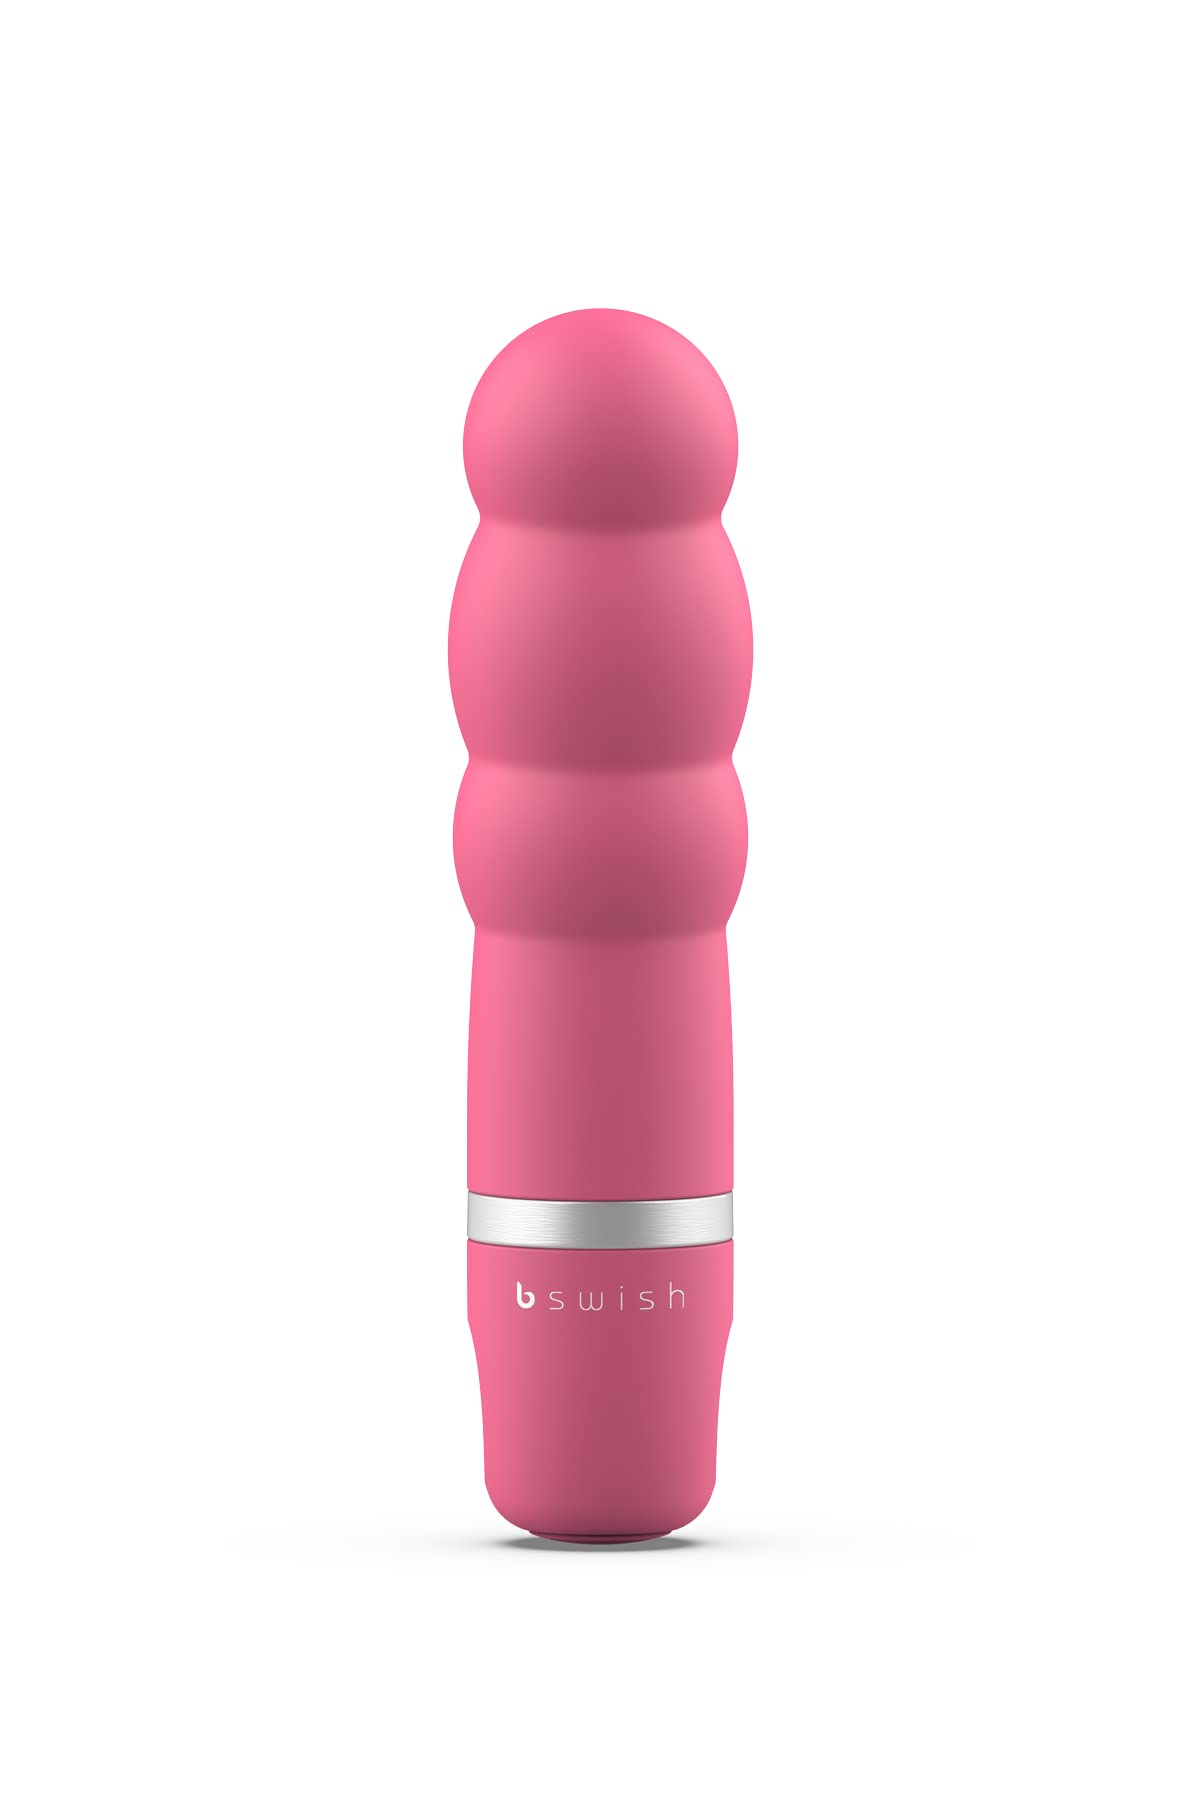 Bswish Bcute Pearl Vibrator in rosa